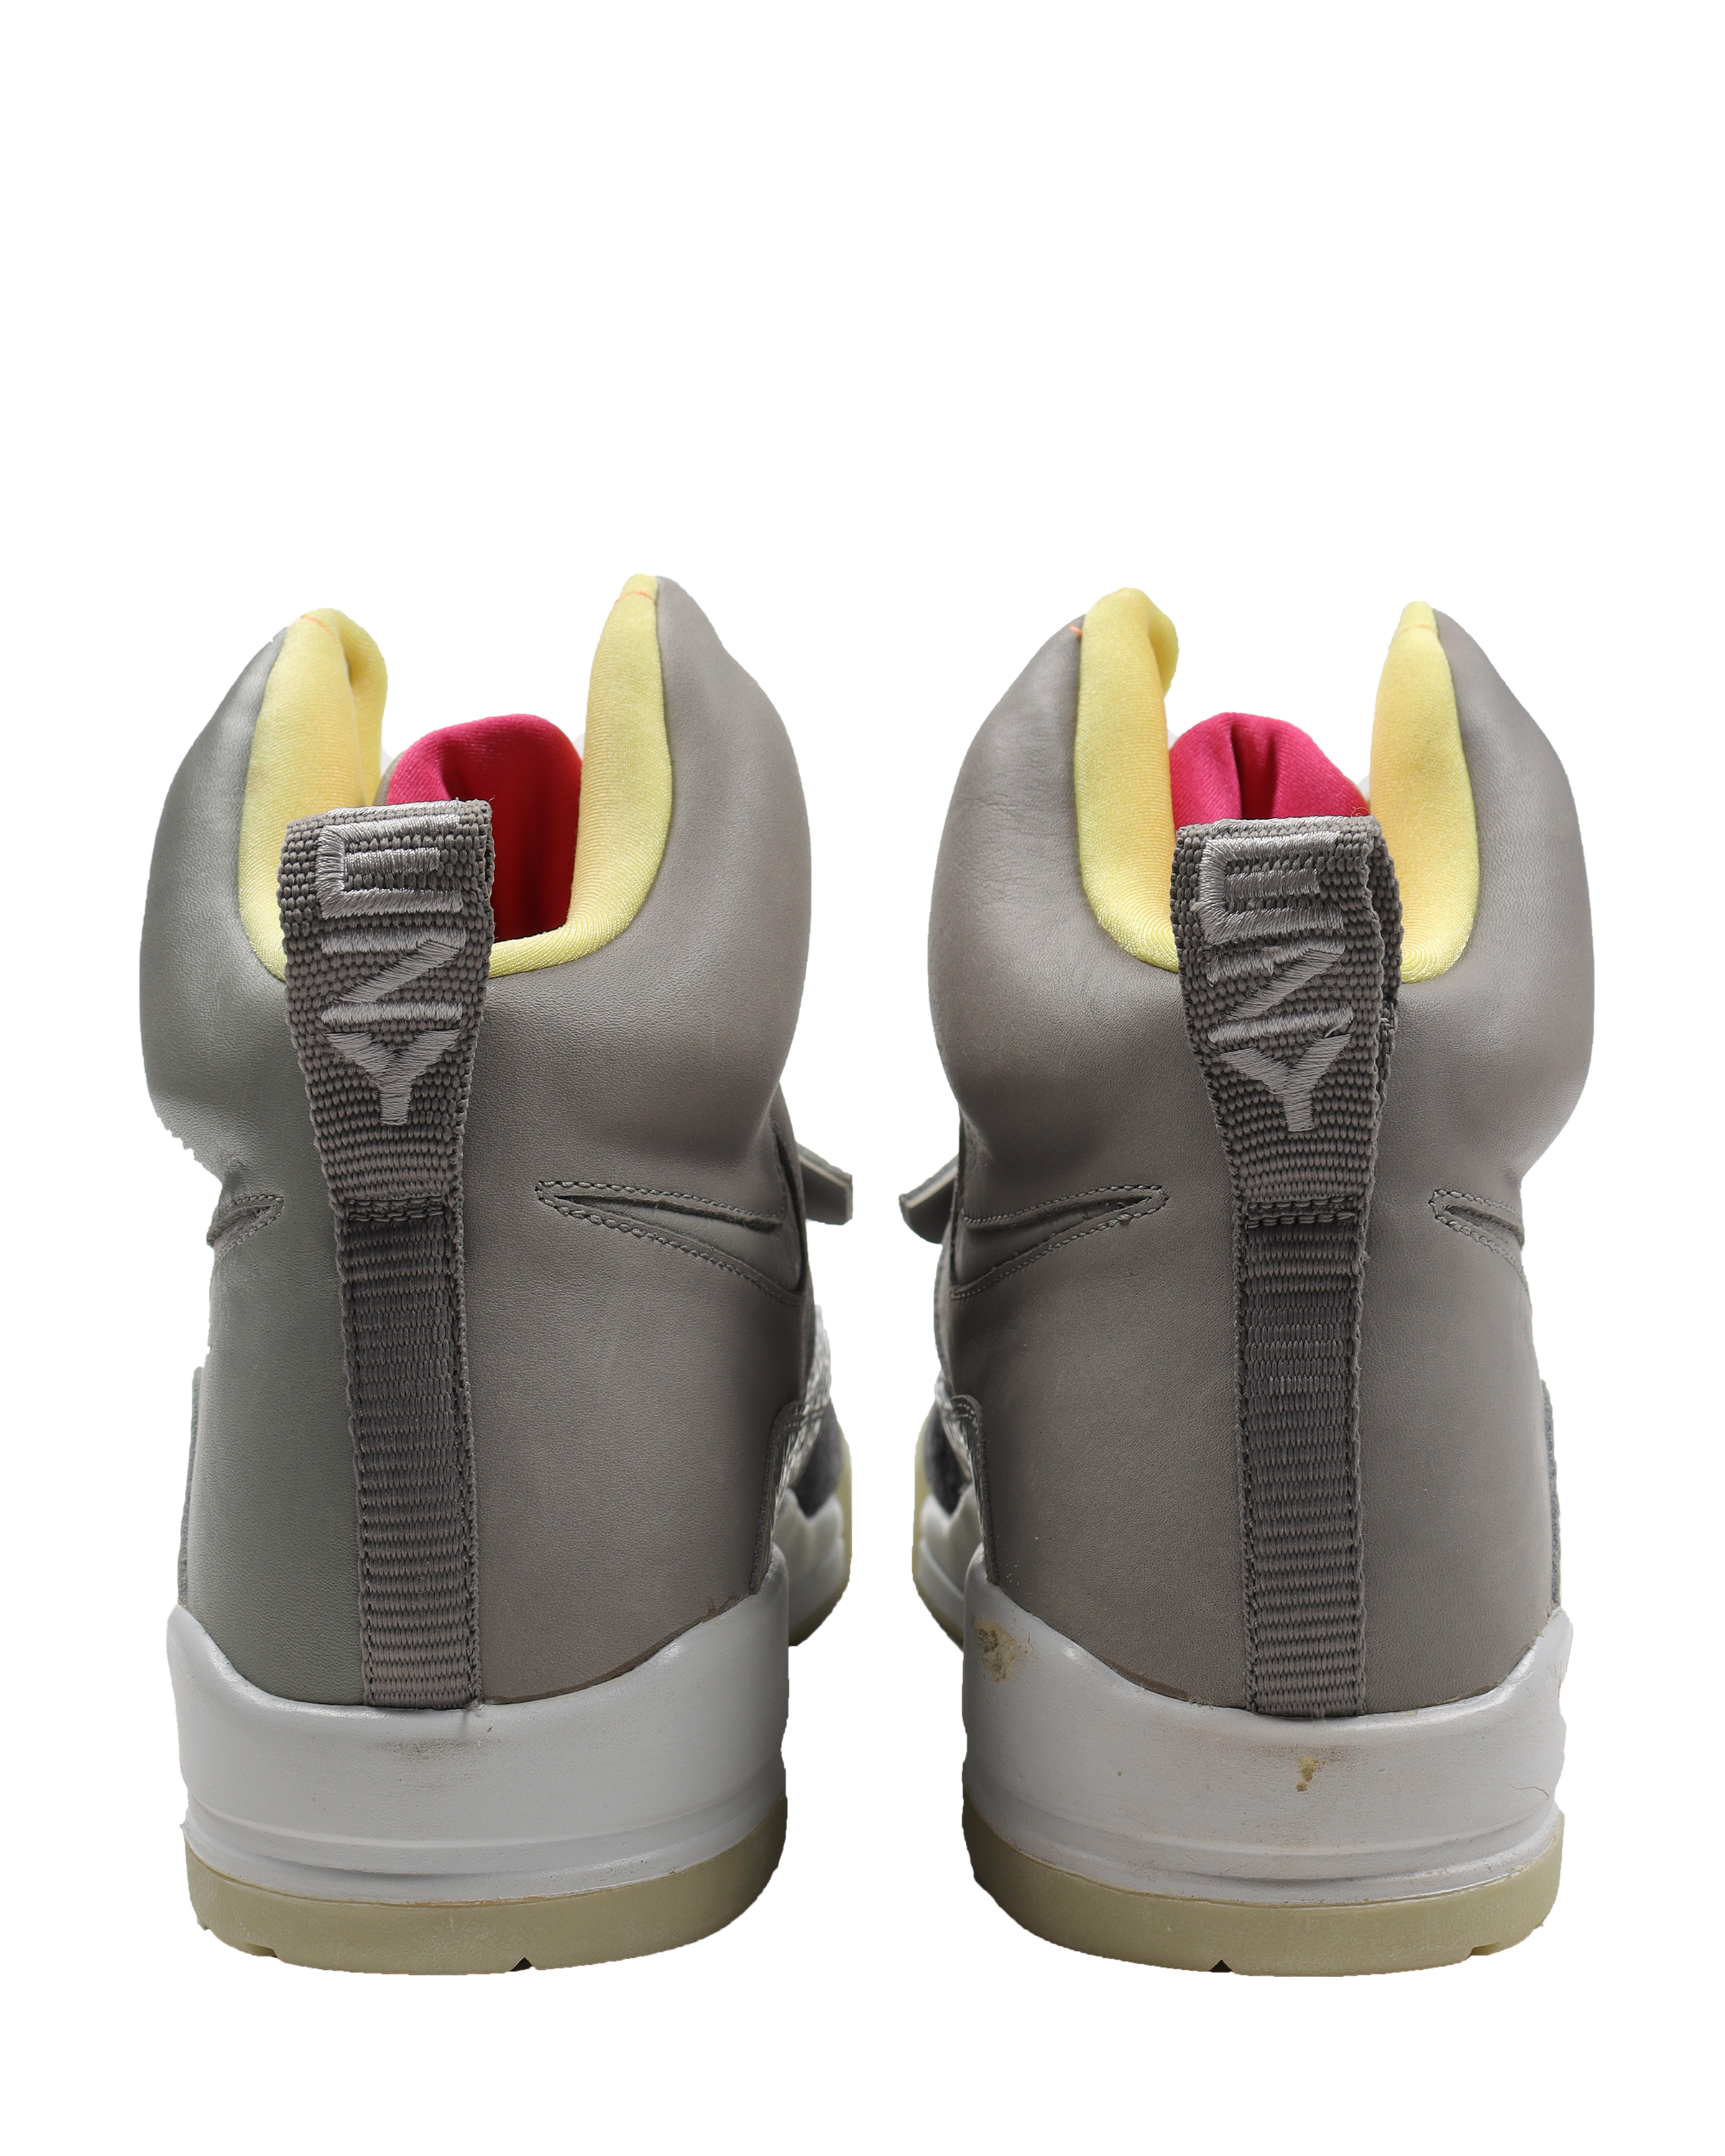 TBT // Nike Air Yeezy 1 Zen Grey